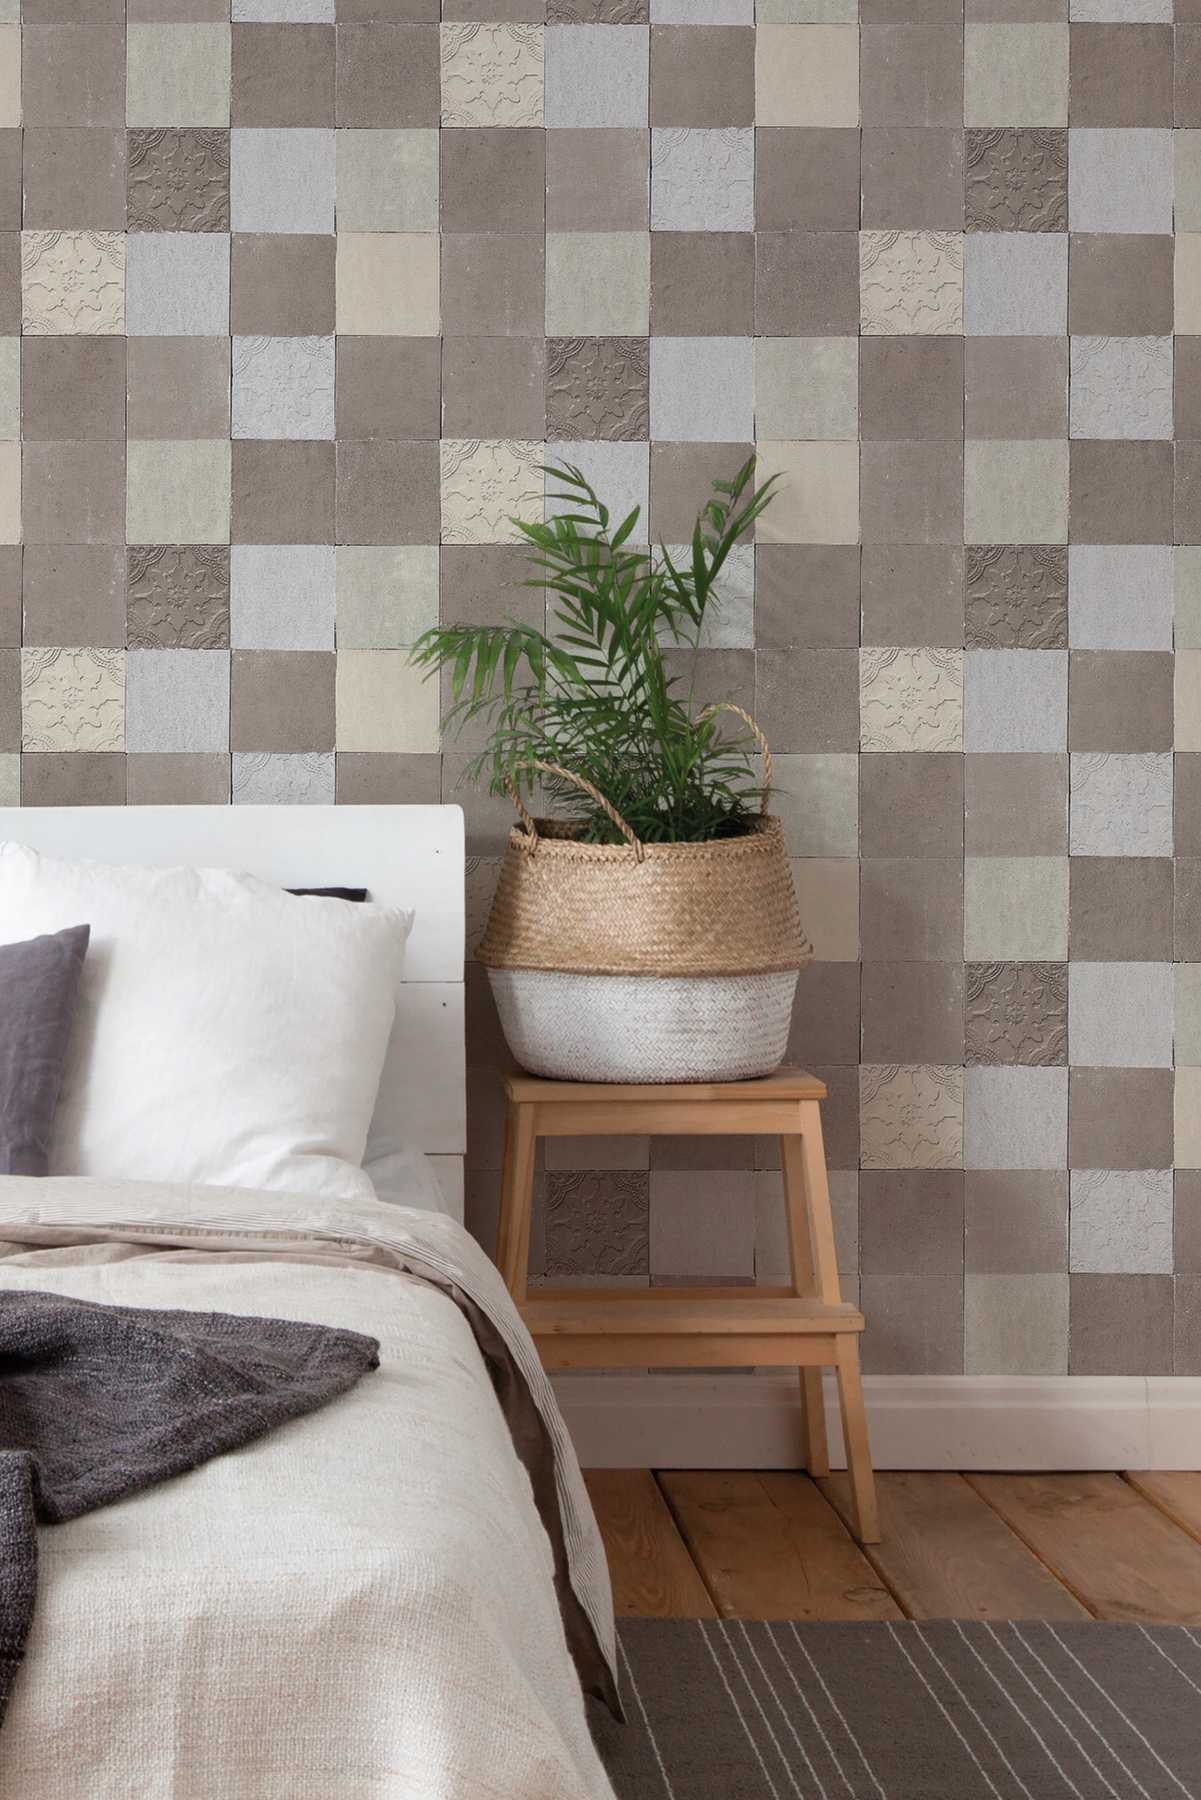             Tile wallpaper oriental mosaic - grey, cream
        